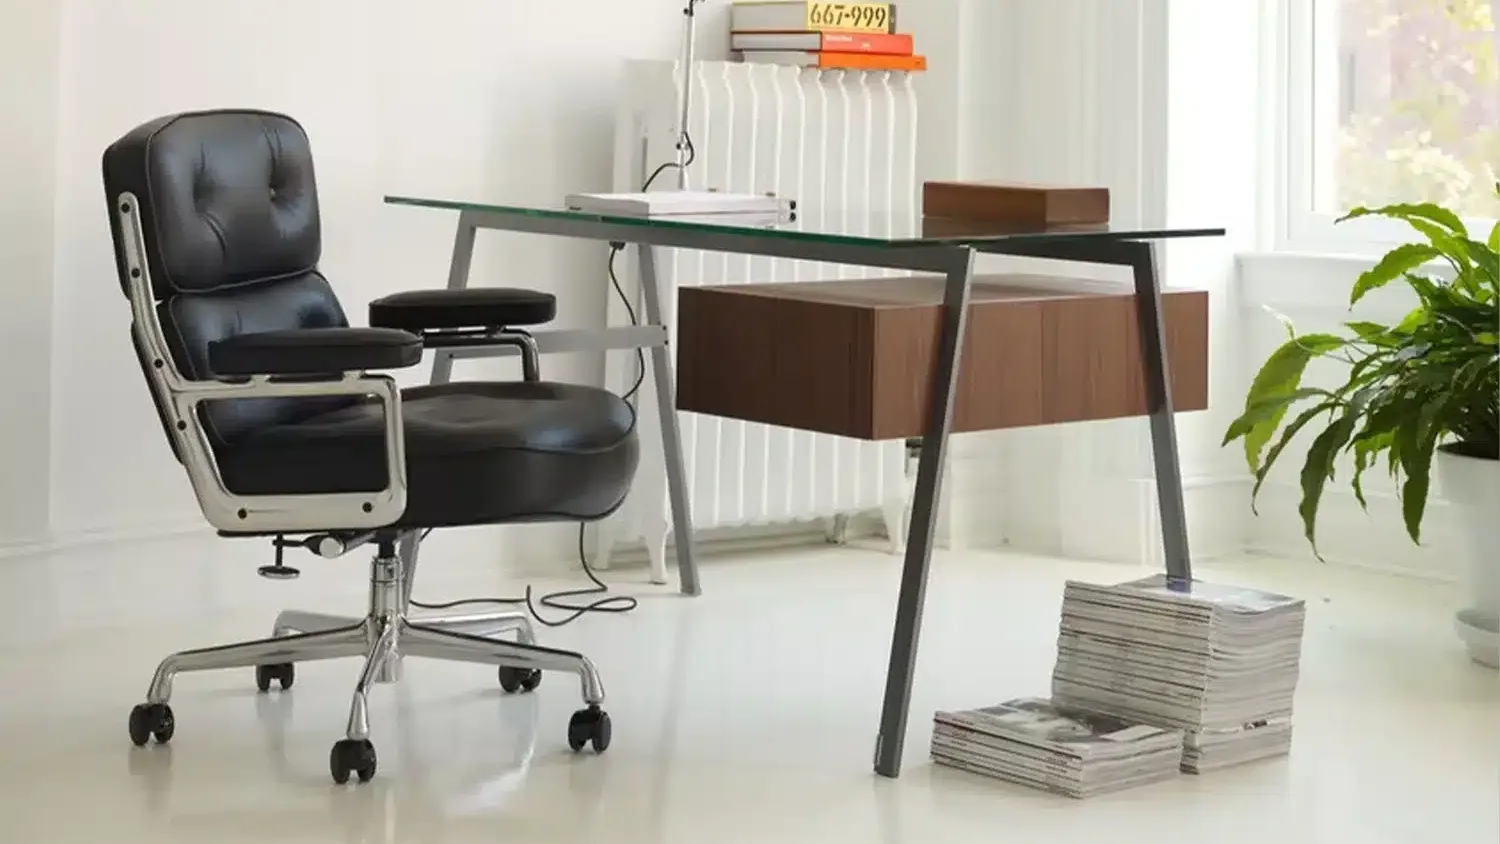 Time-Life Eames Chair Replica